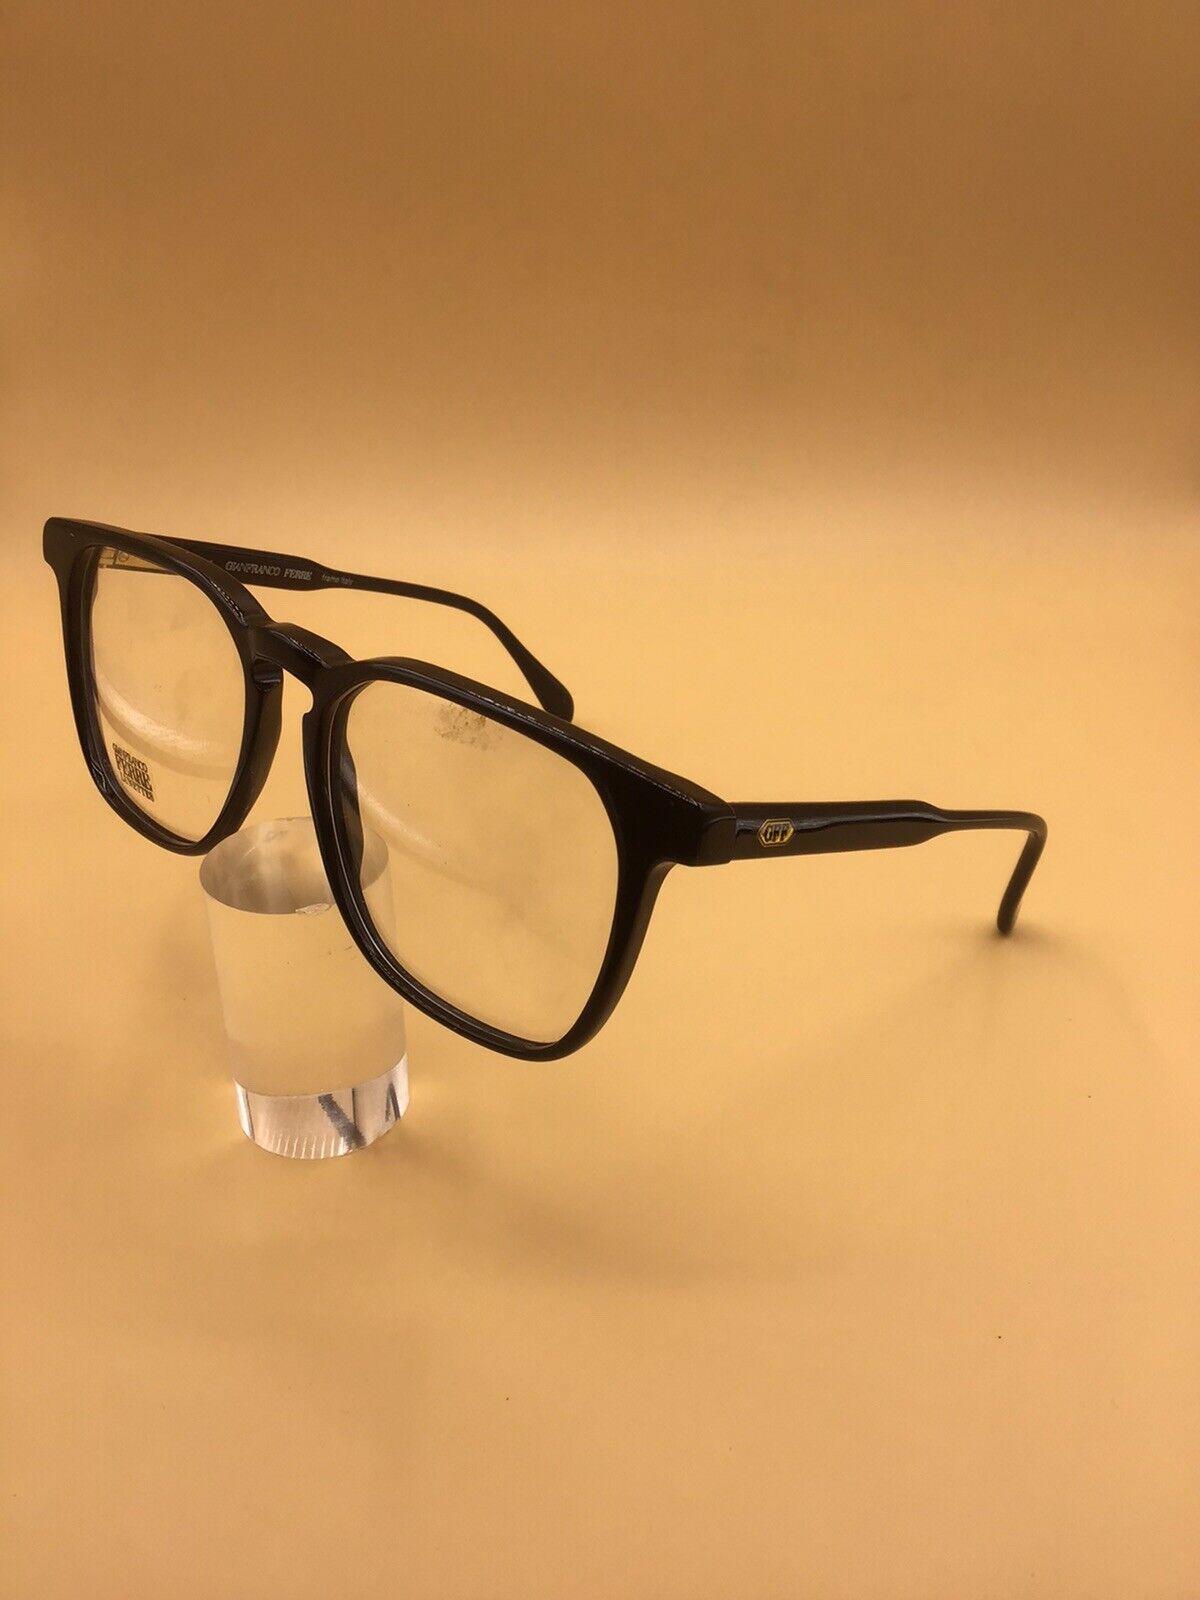 Gianfranco Ferre occhiale vintage eyewear frame brillen lunettes GFF 55 807